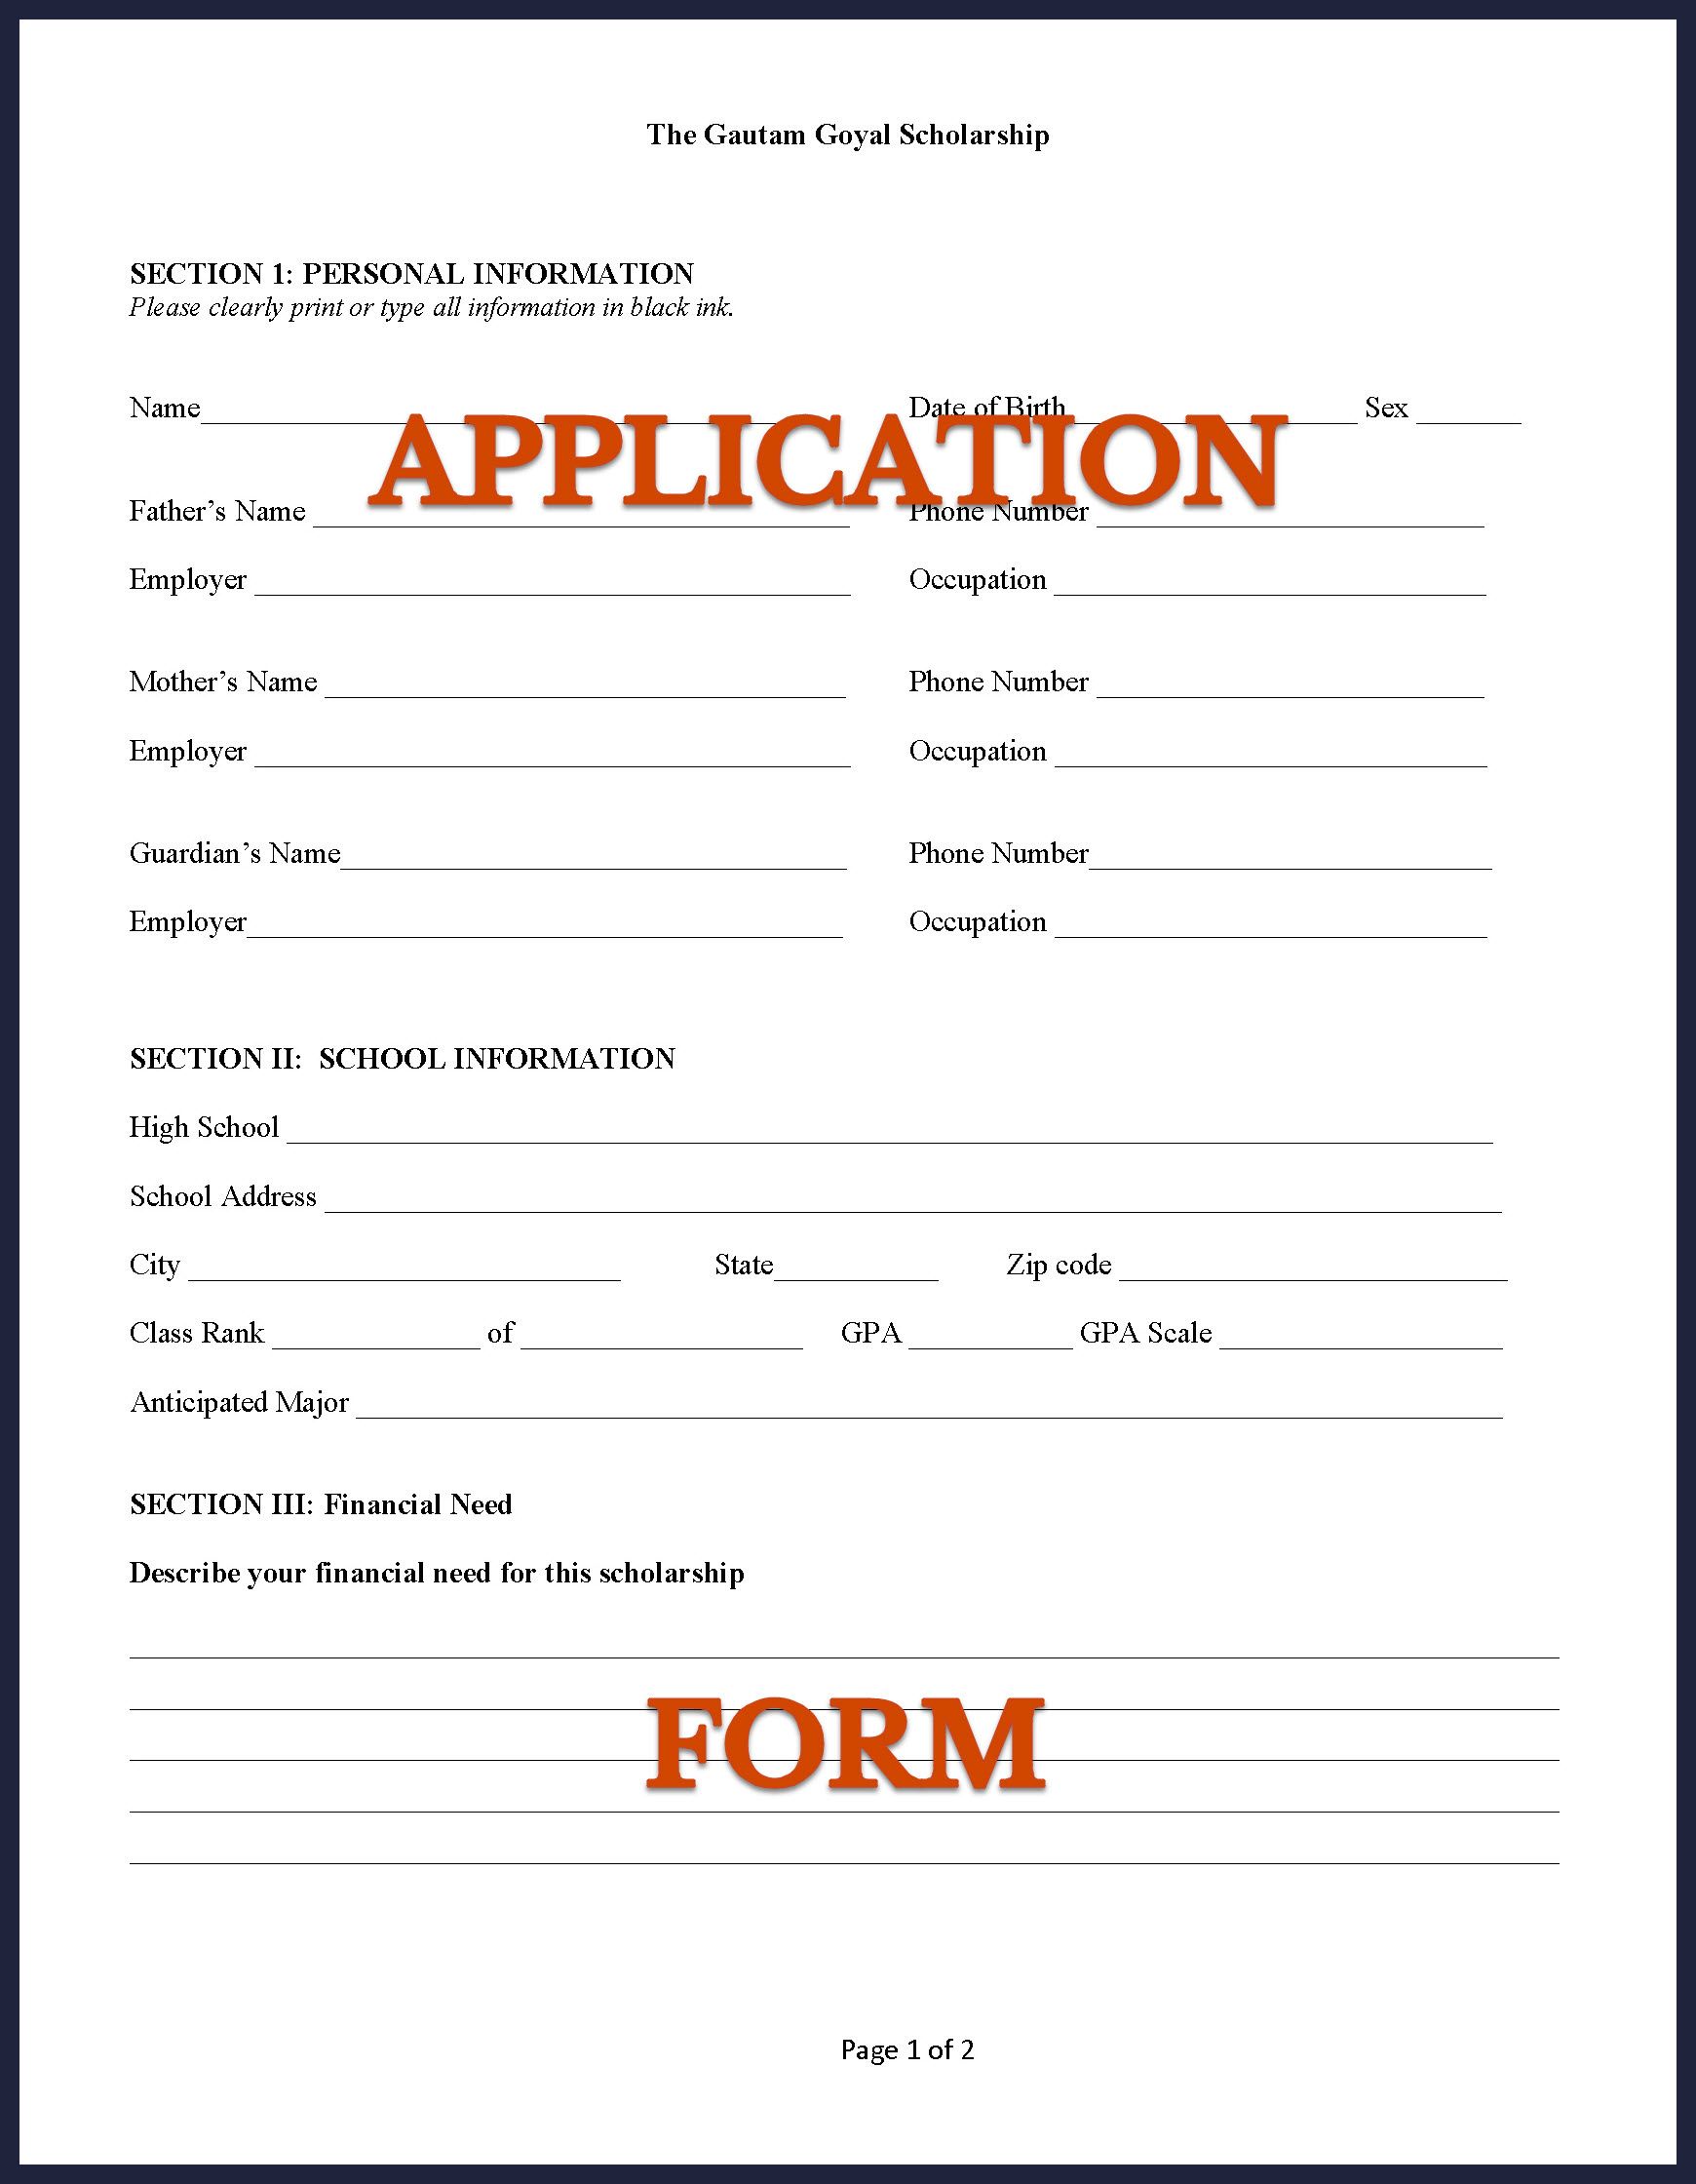 Gautam Goyal Scholarship application form sample page